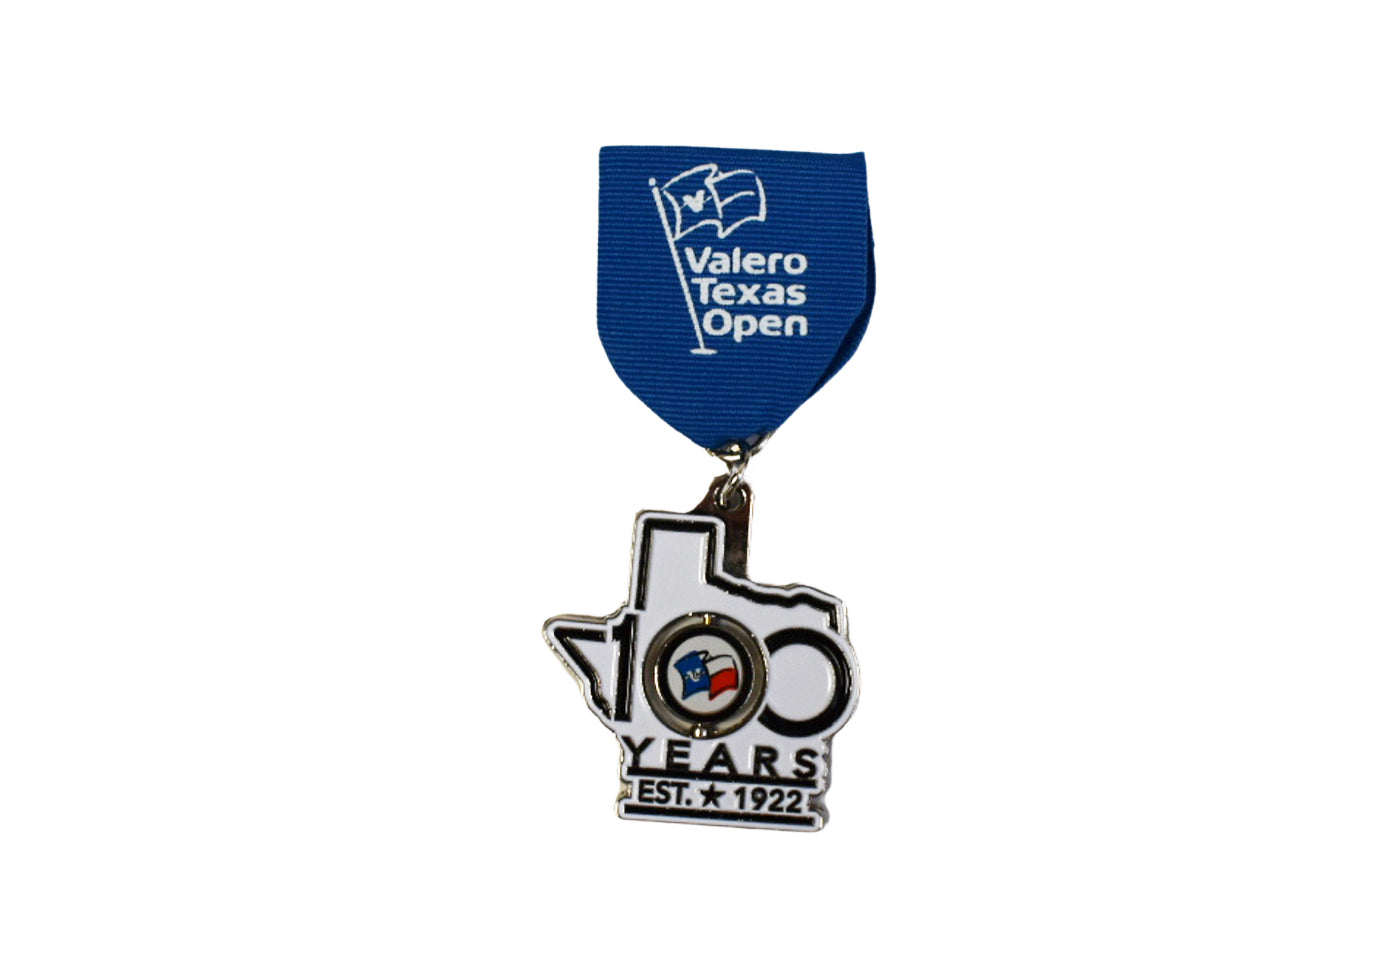 2022 Valero Texas Open Fiesta Medal